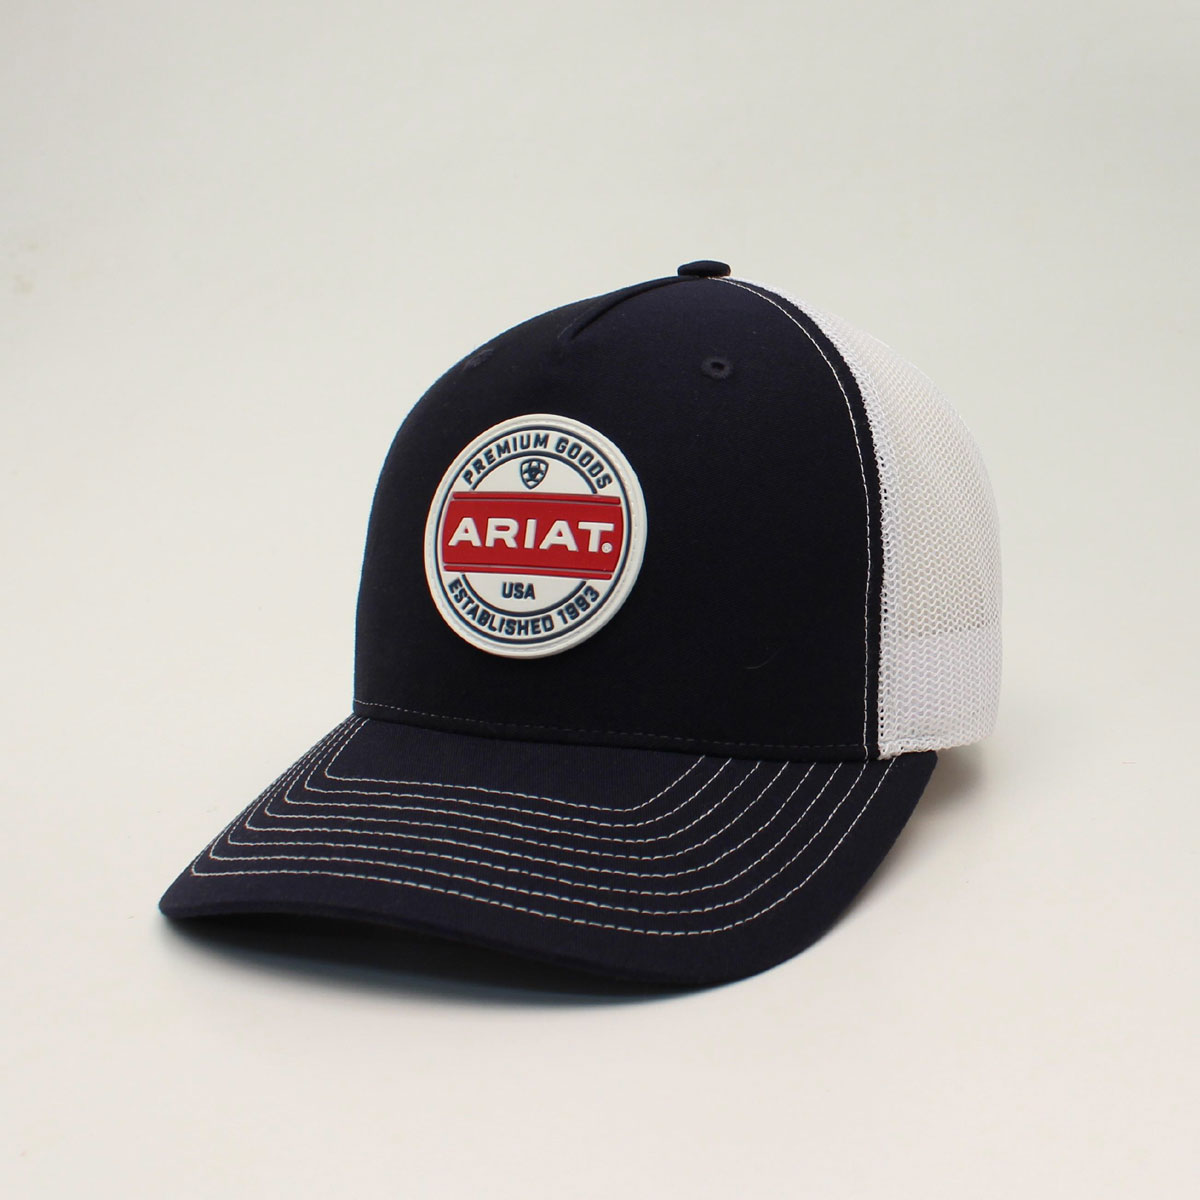 Ariat 112 Snapback Cap - Navy w/Logo Patch